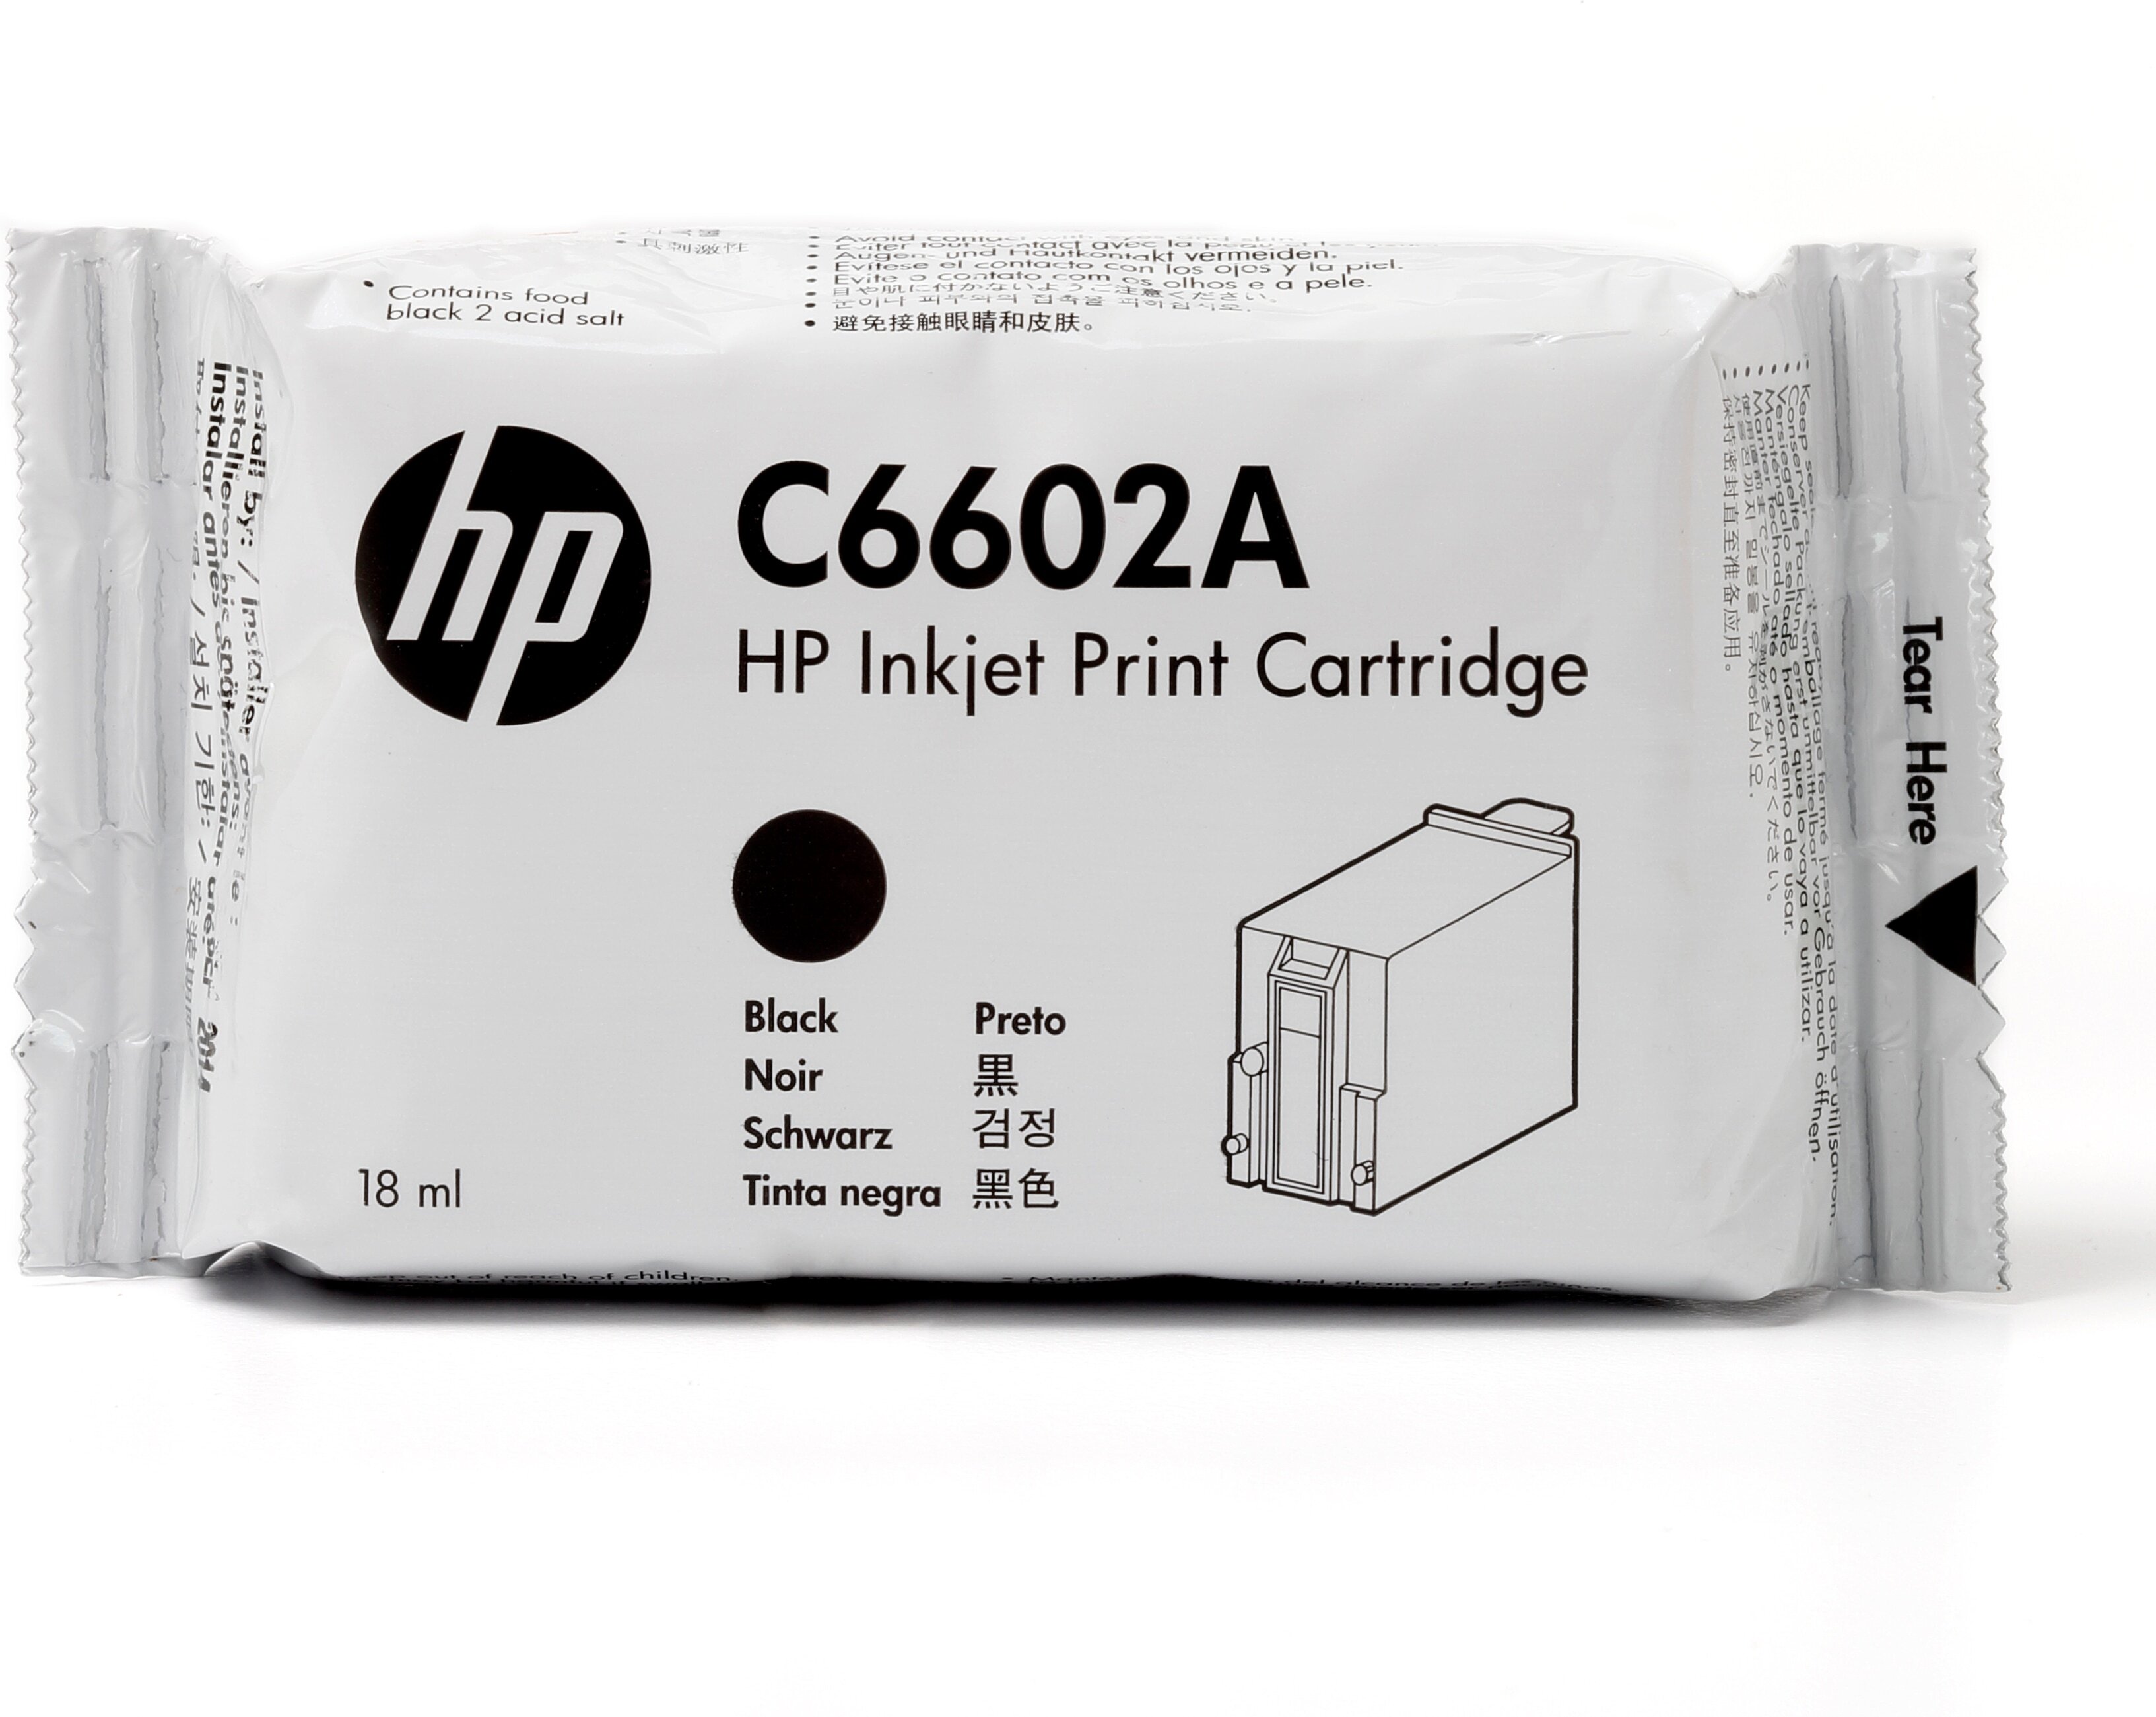 HP generieke zwarte inktcartridge single pack / zwart